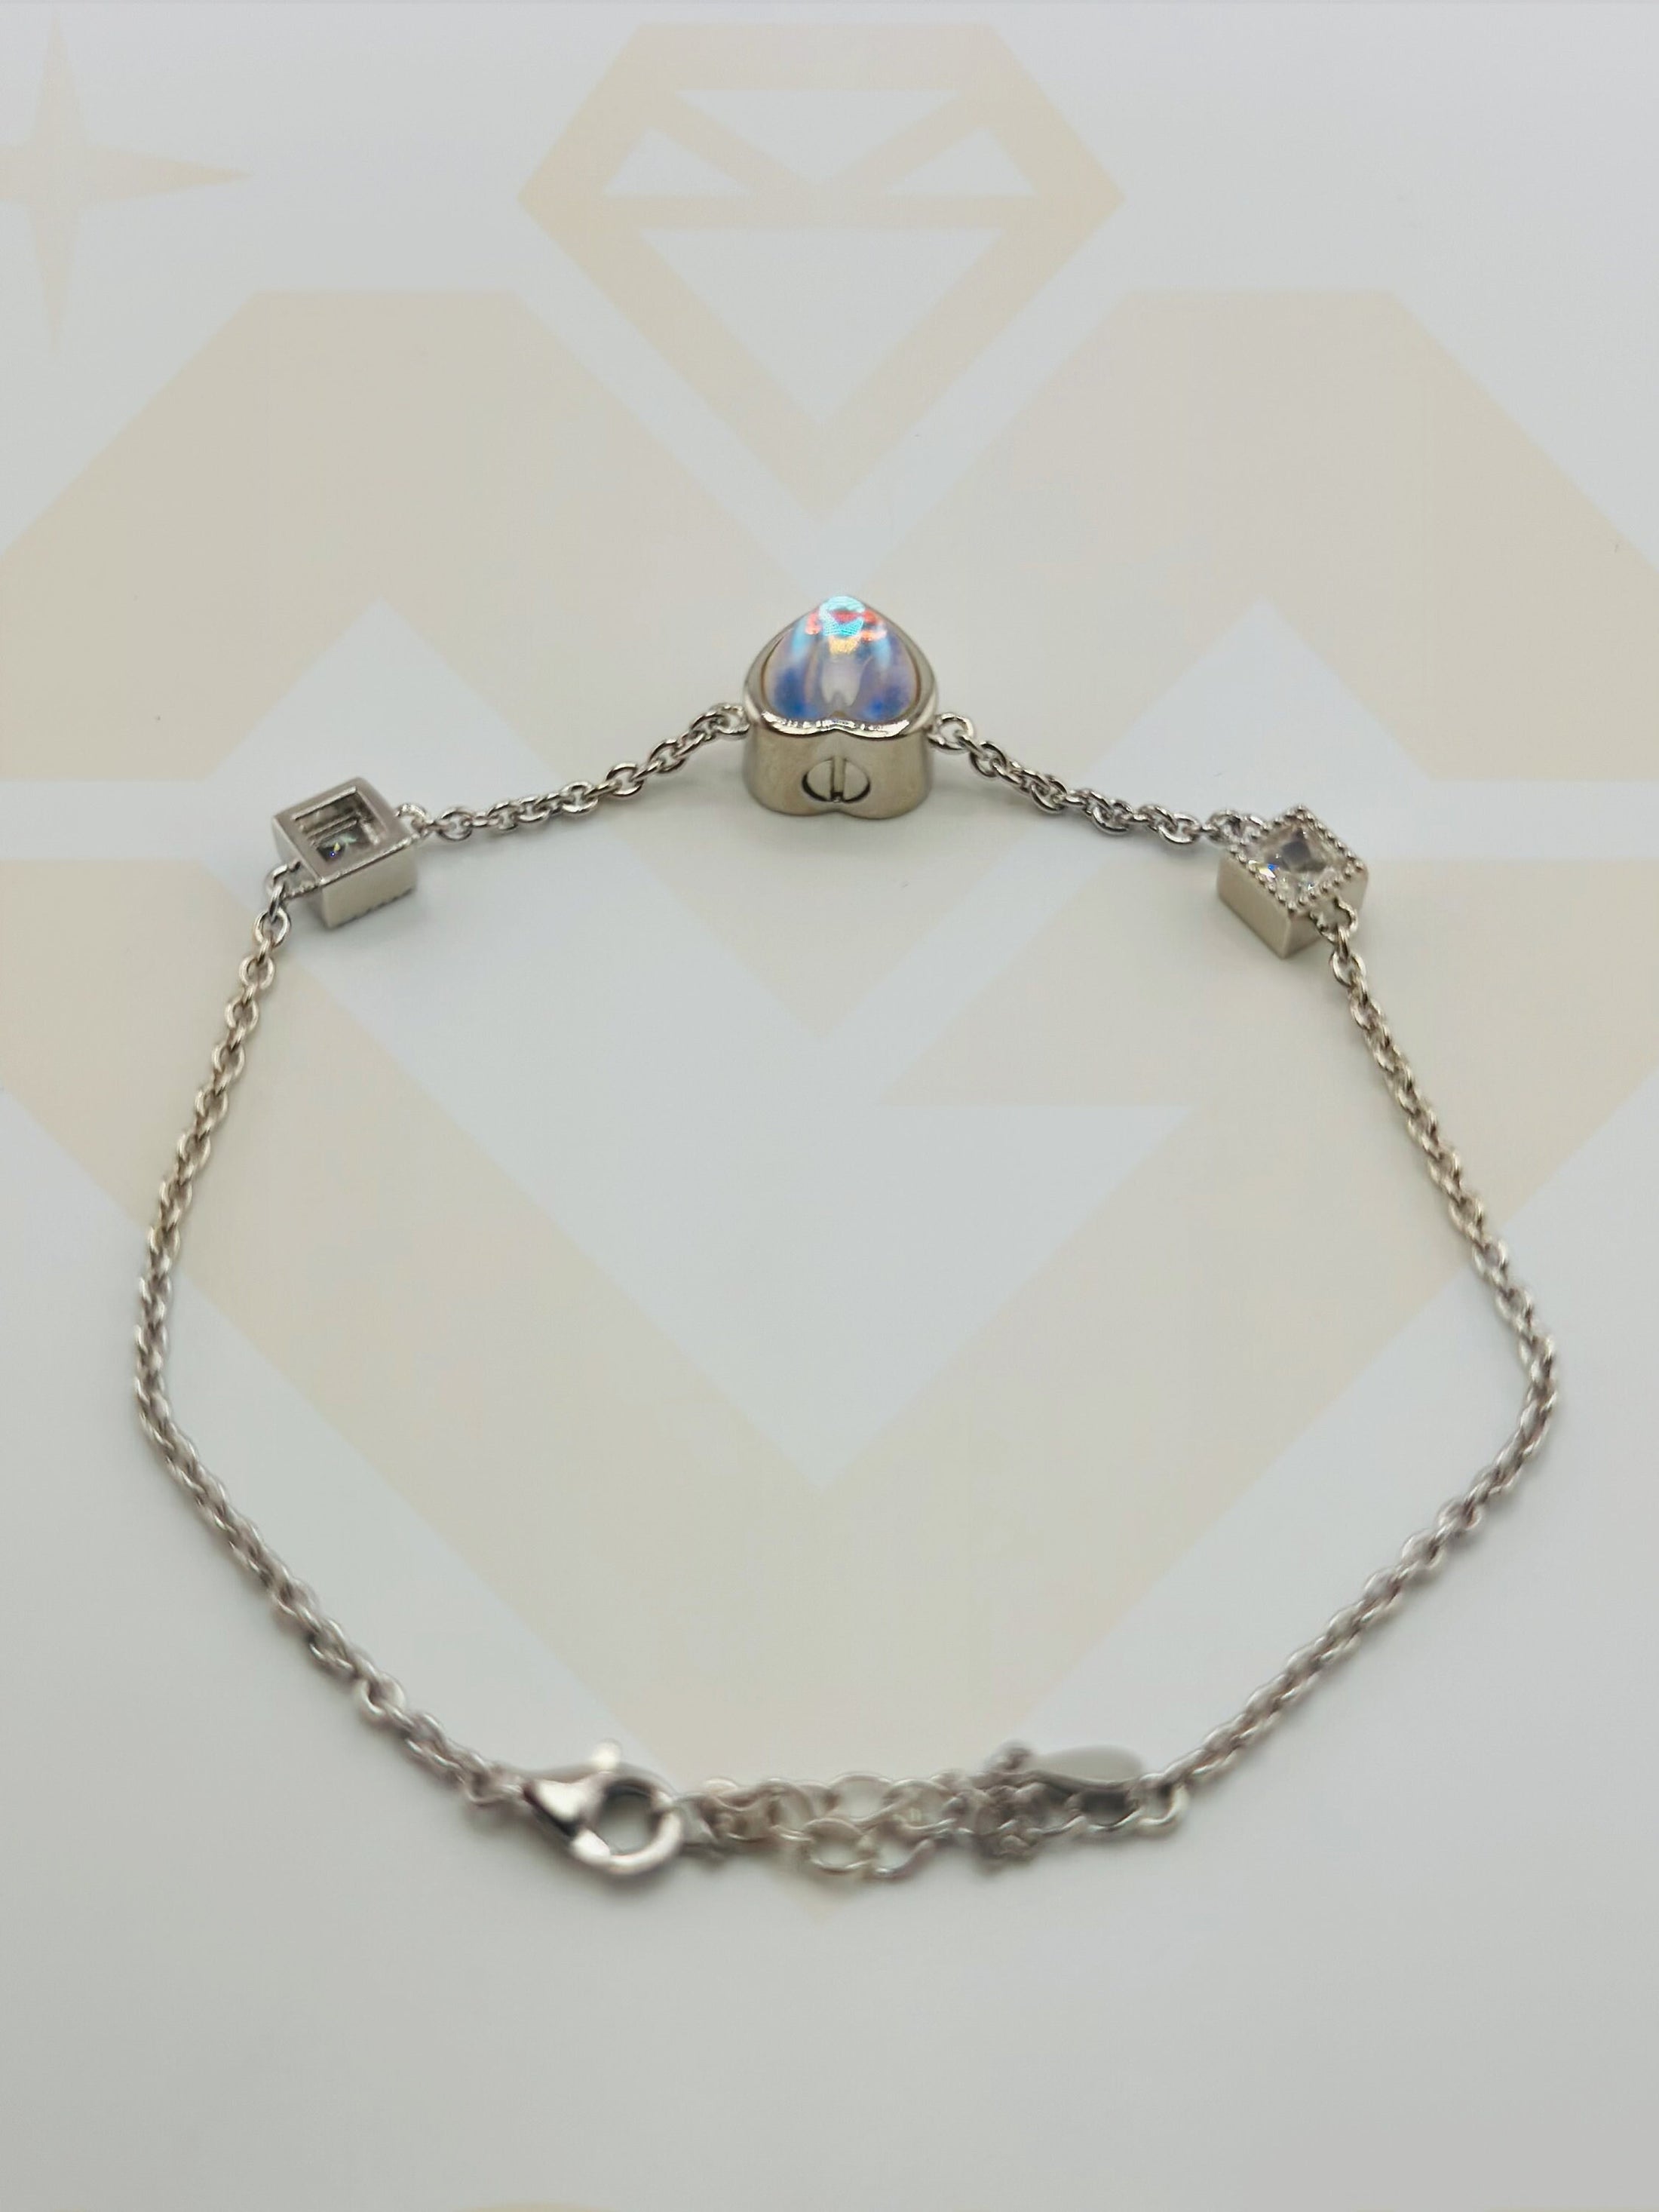 Heart Urn Bracelet - Aquamarine Sapphire Crystal - Memorial Keepsake - Cremation Heart Urn Jewelry, Ash Holder for Human/Pet ashes Urn Gift